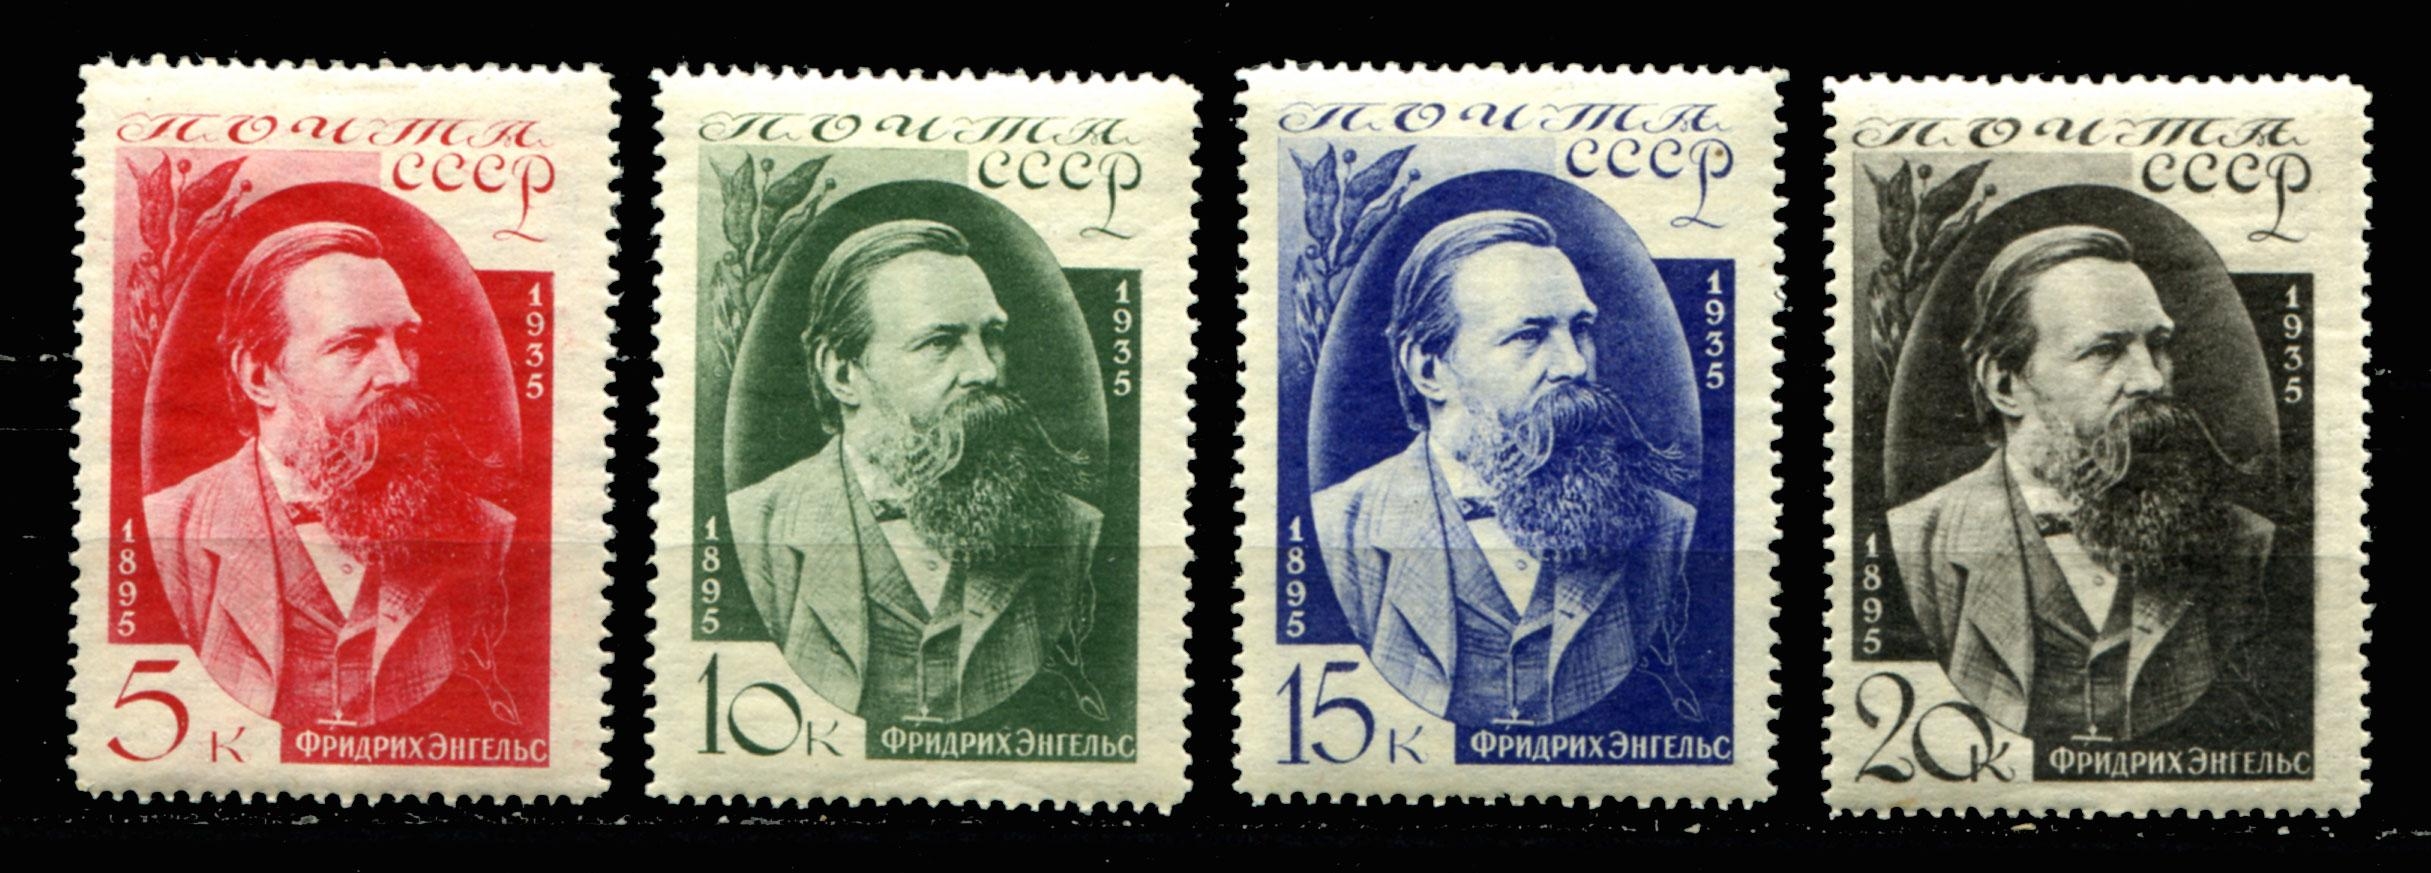 марки на английском аукционе